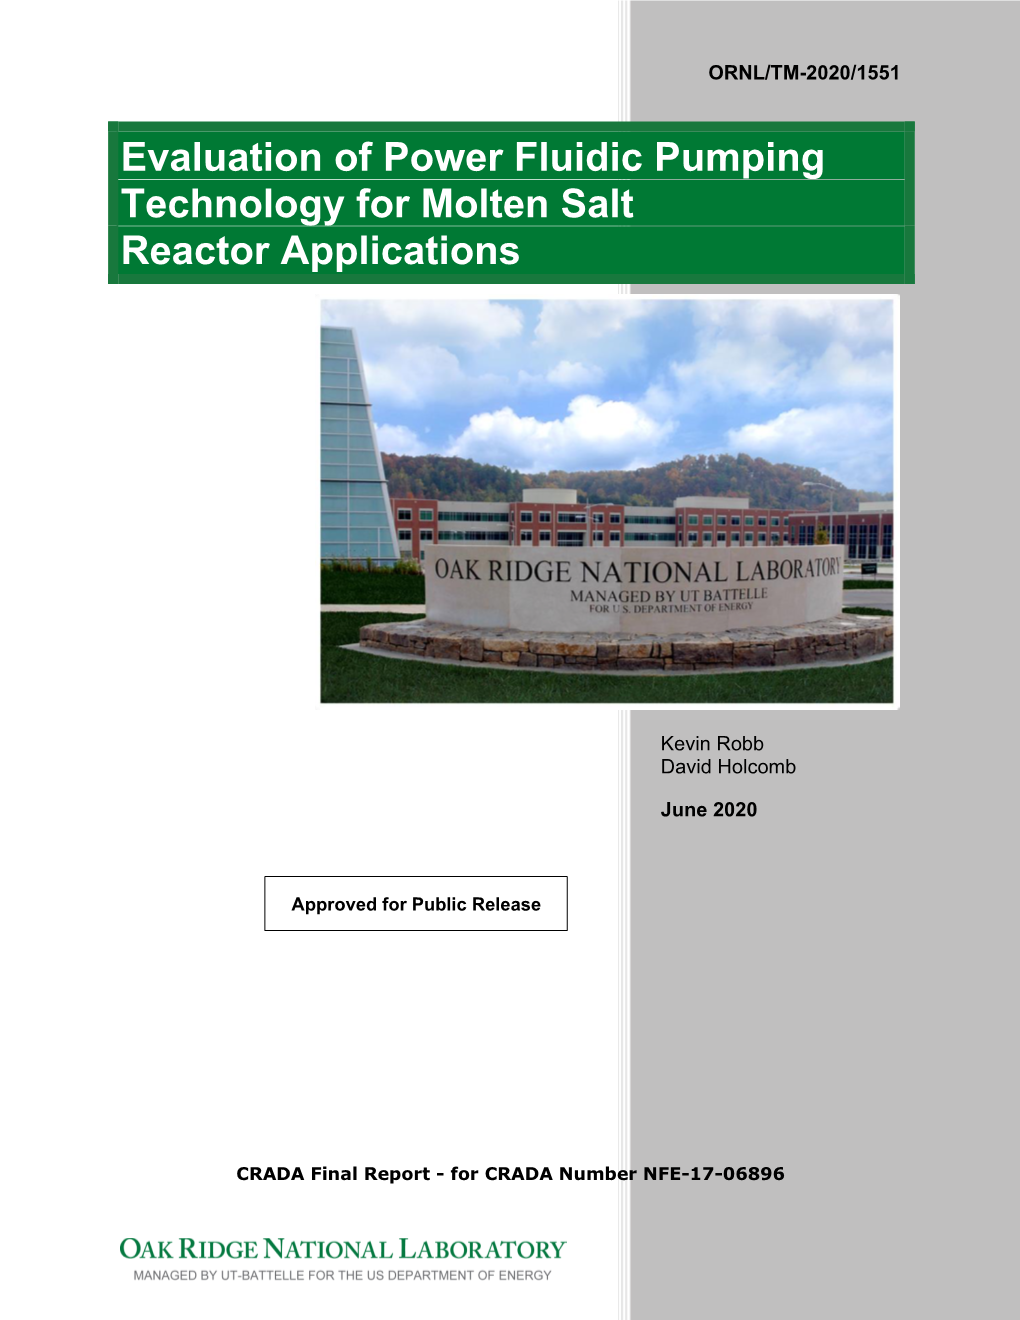 Evaluation of Power Fluidic Pumping Technology for Molten Salt Reactor Applications